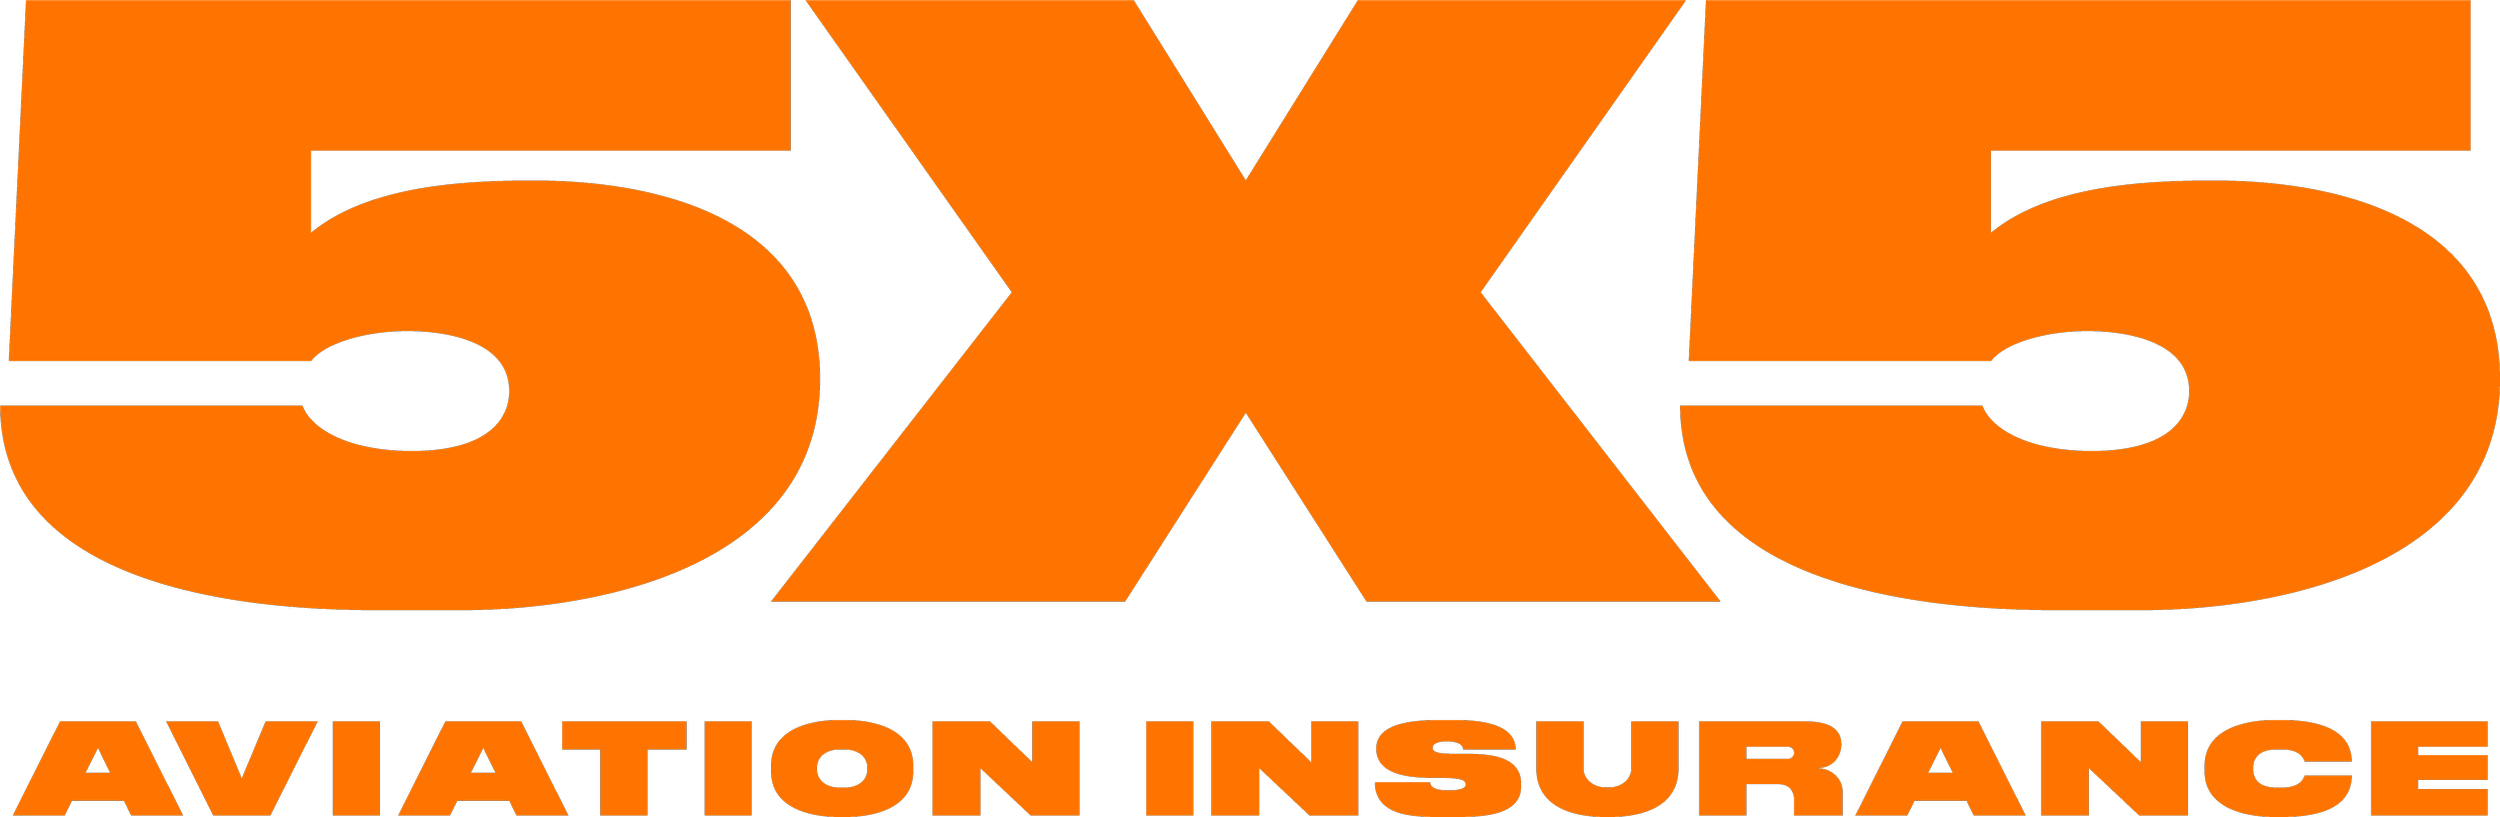 5x5 Aviation Insurance Logo